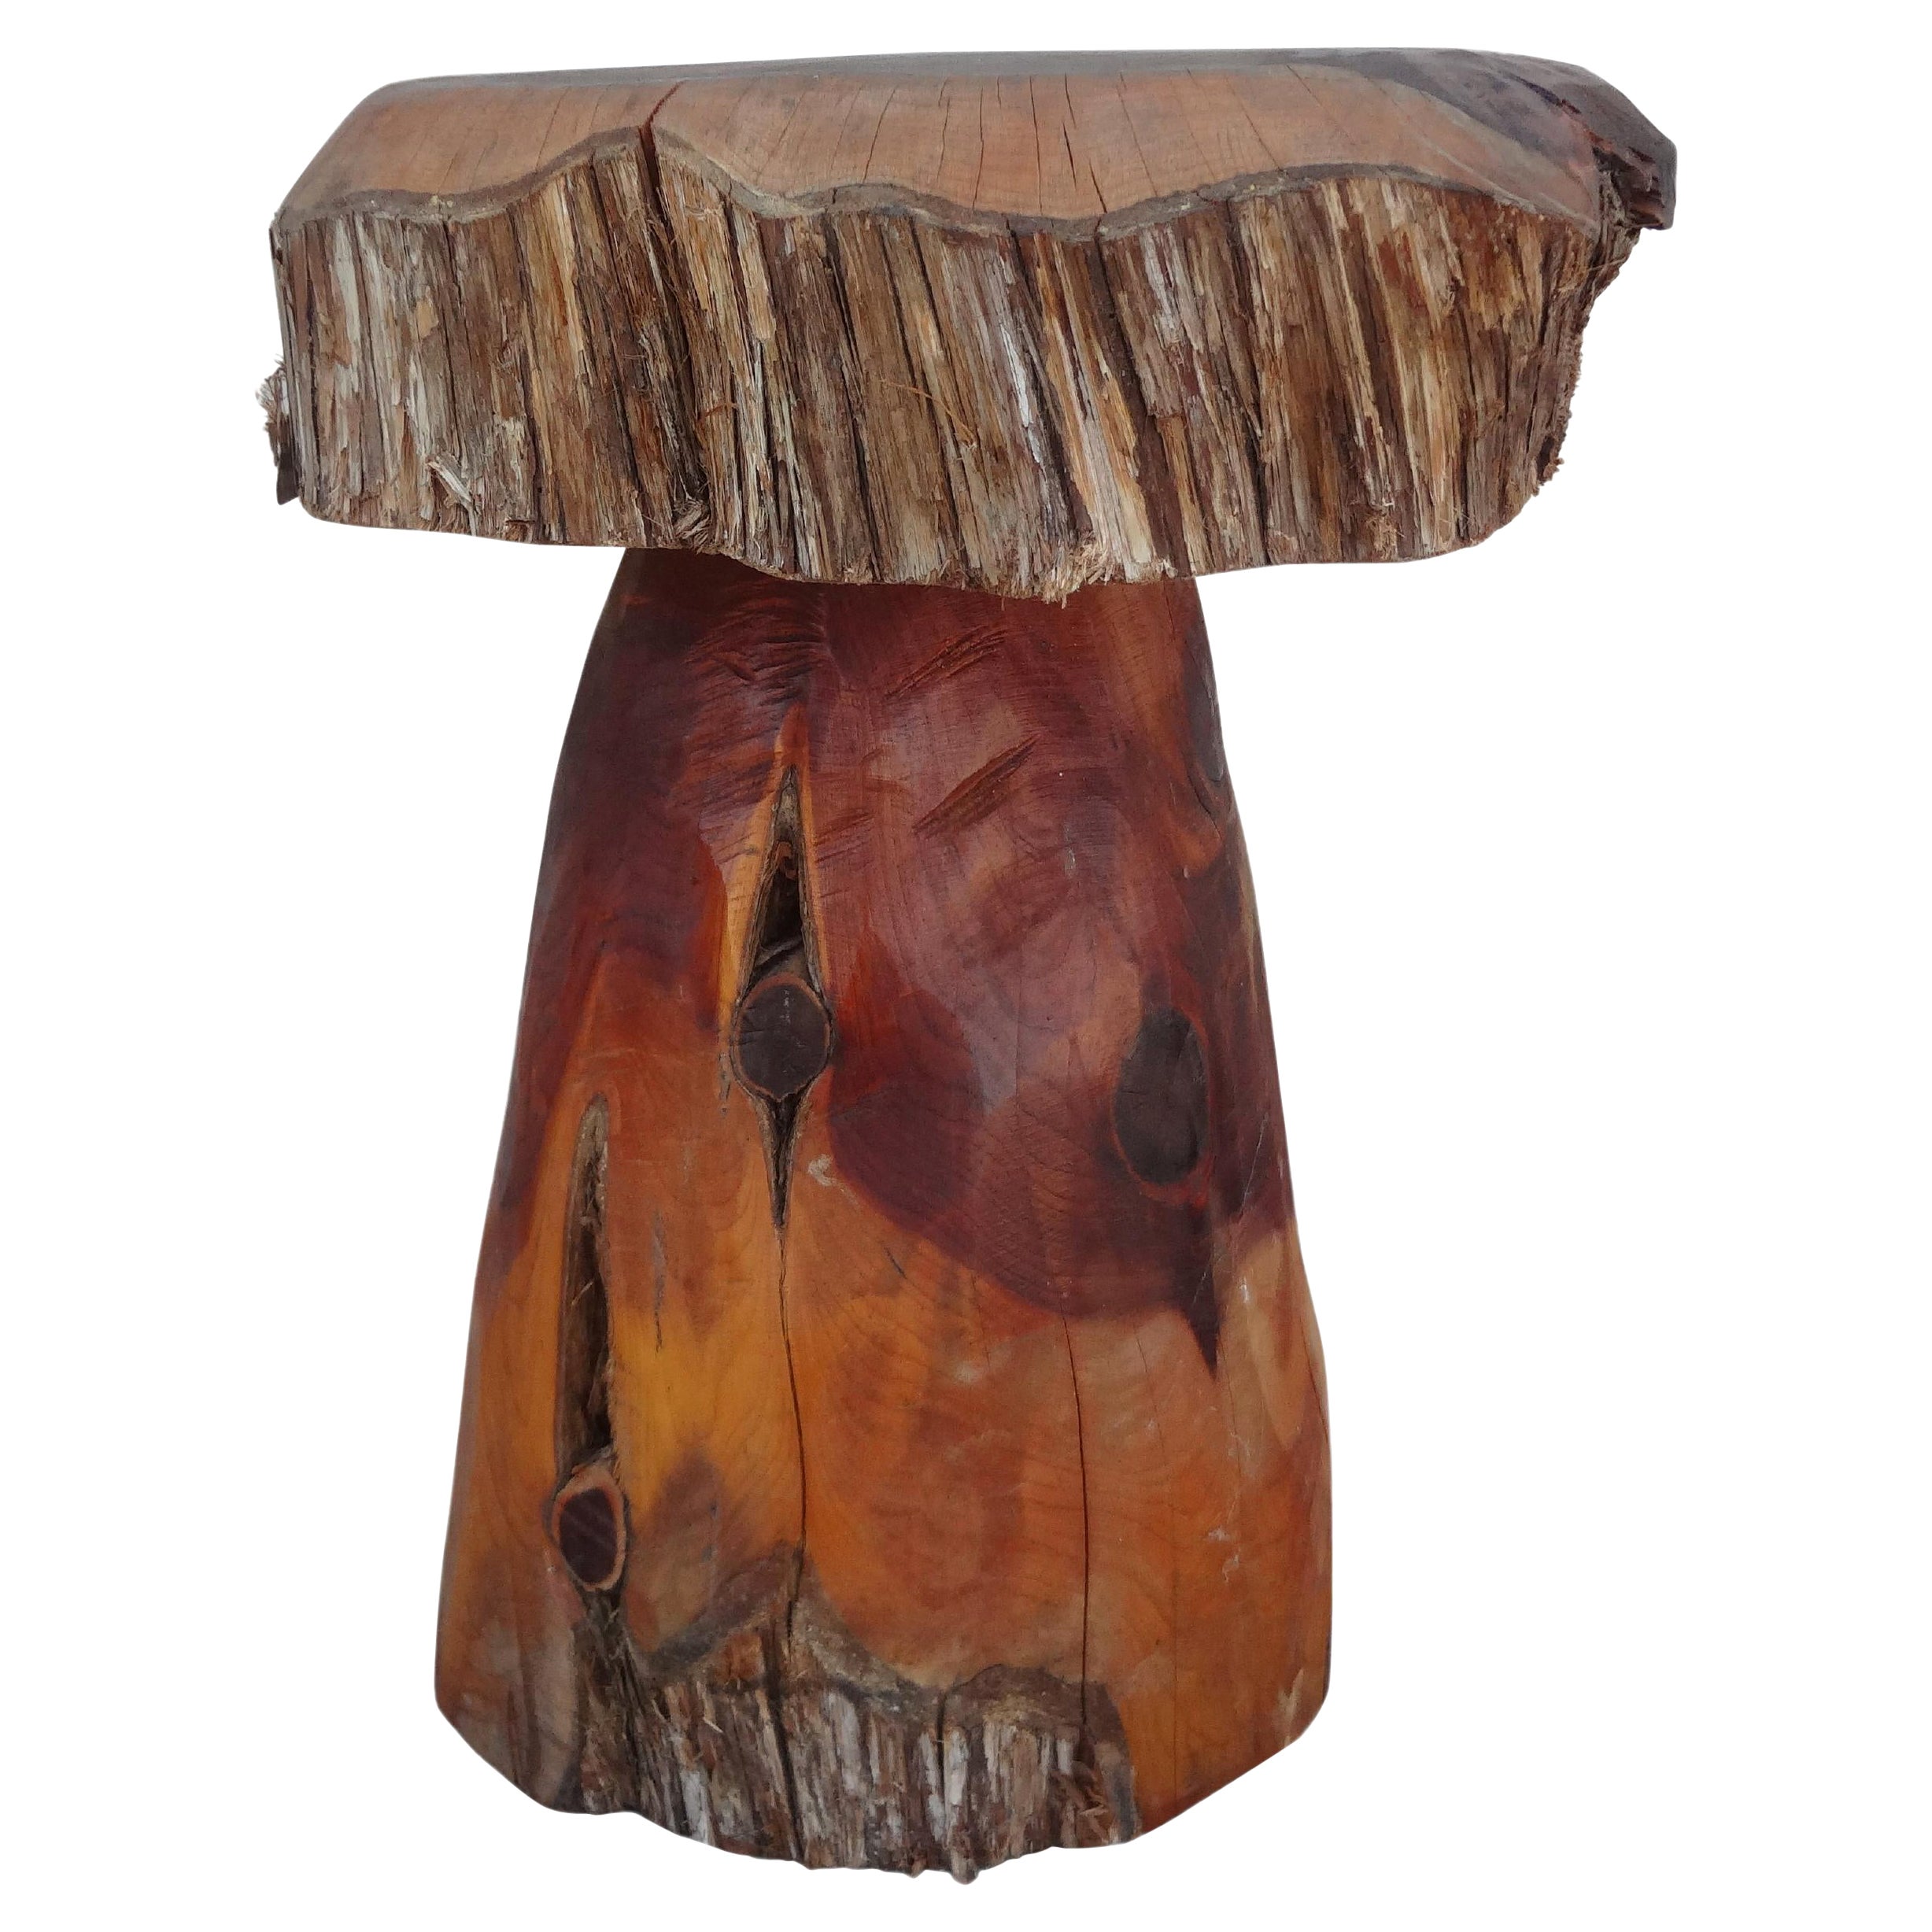 Organic Modern Carved Wood Mushroom Table For Sale